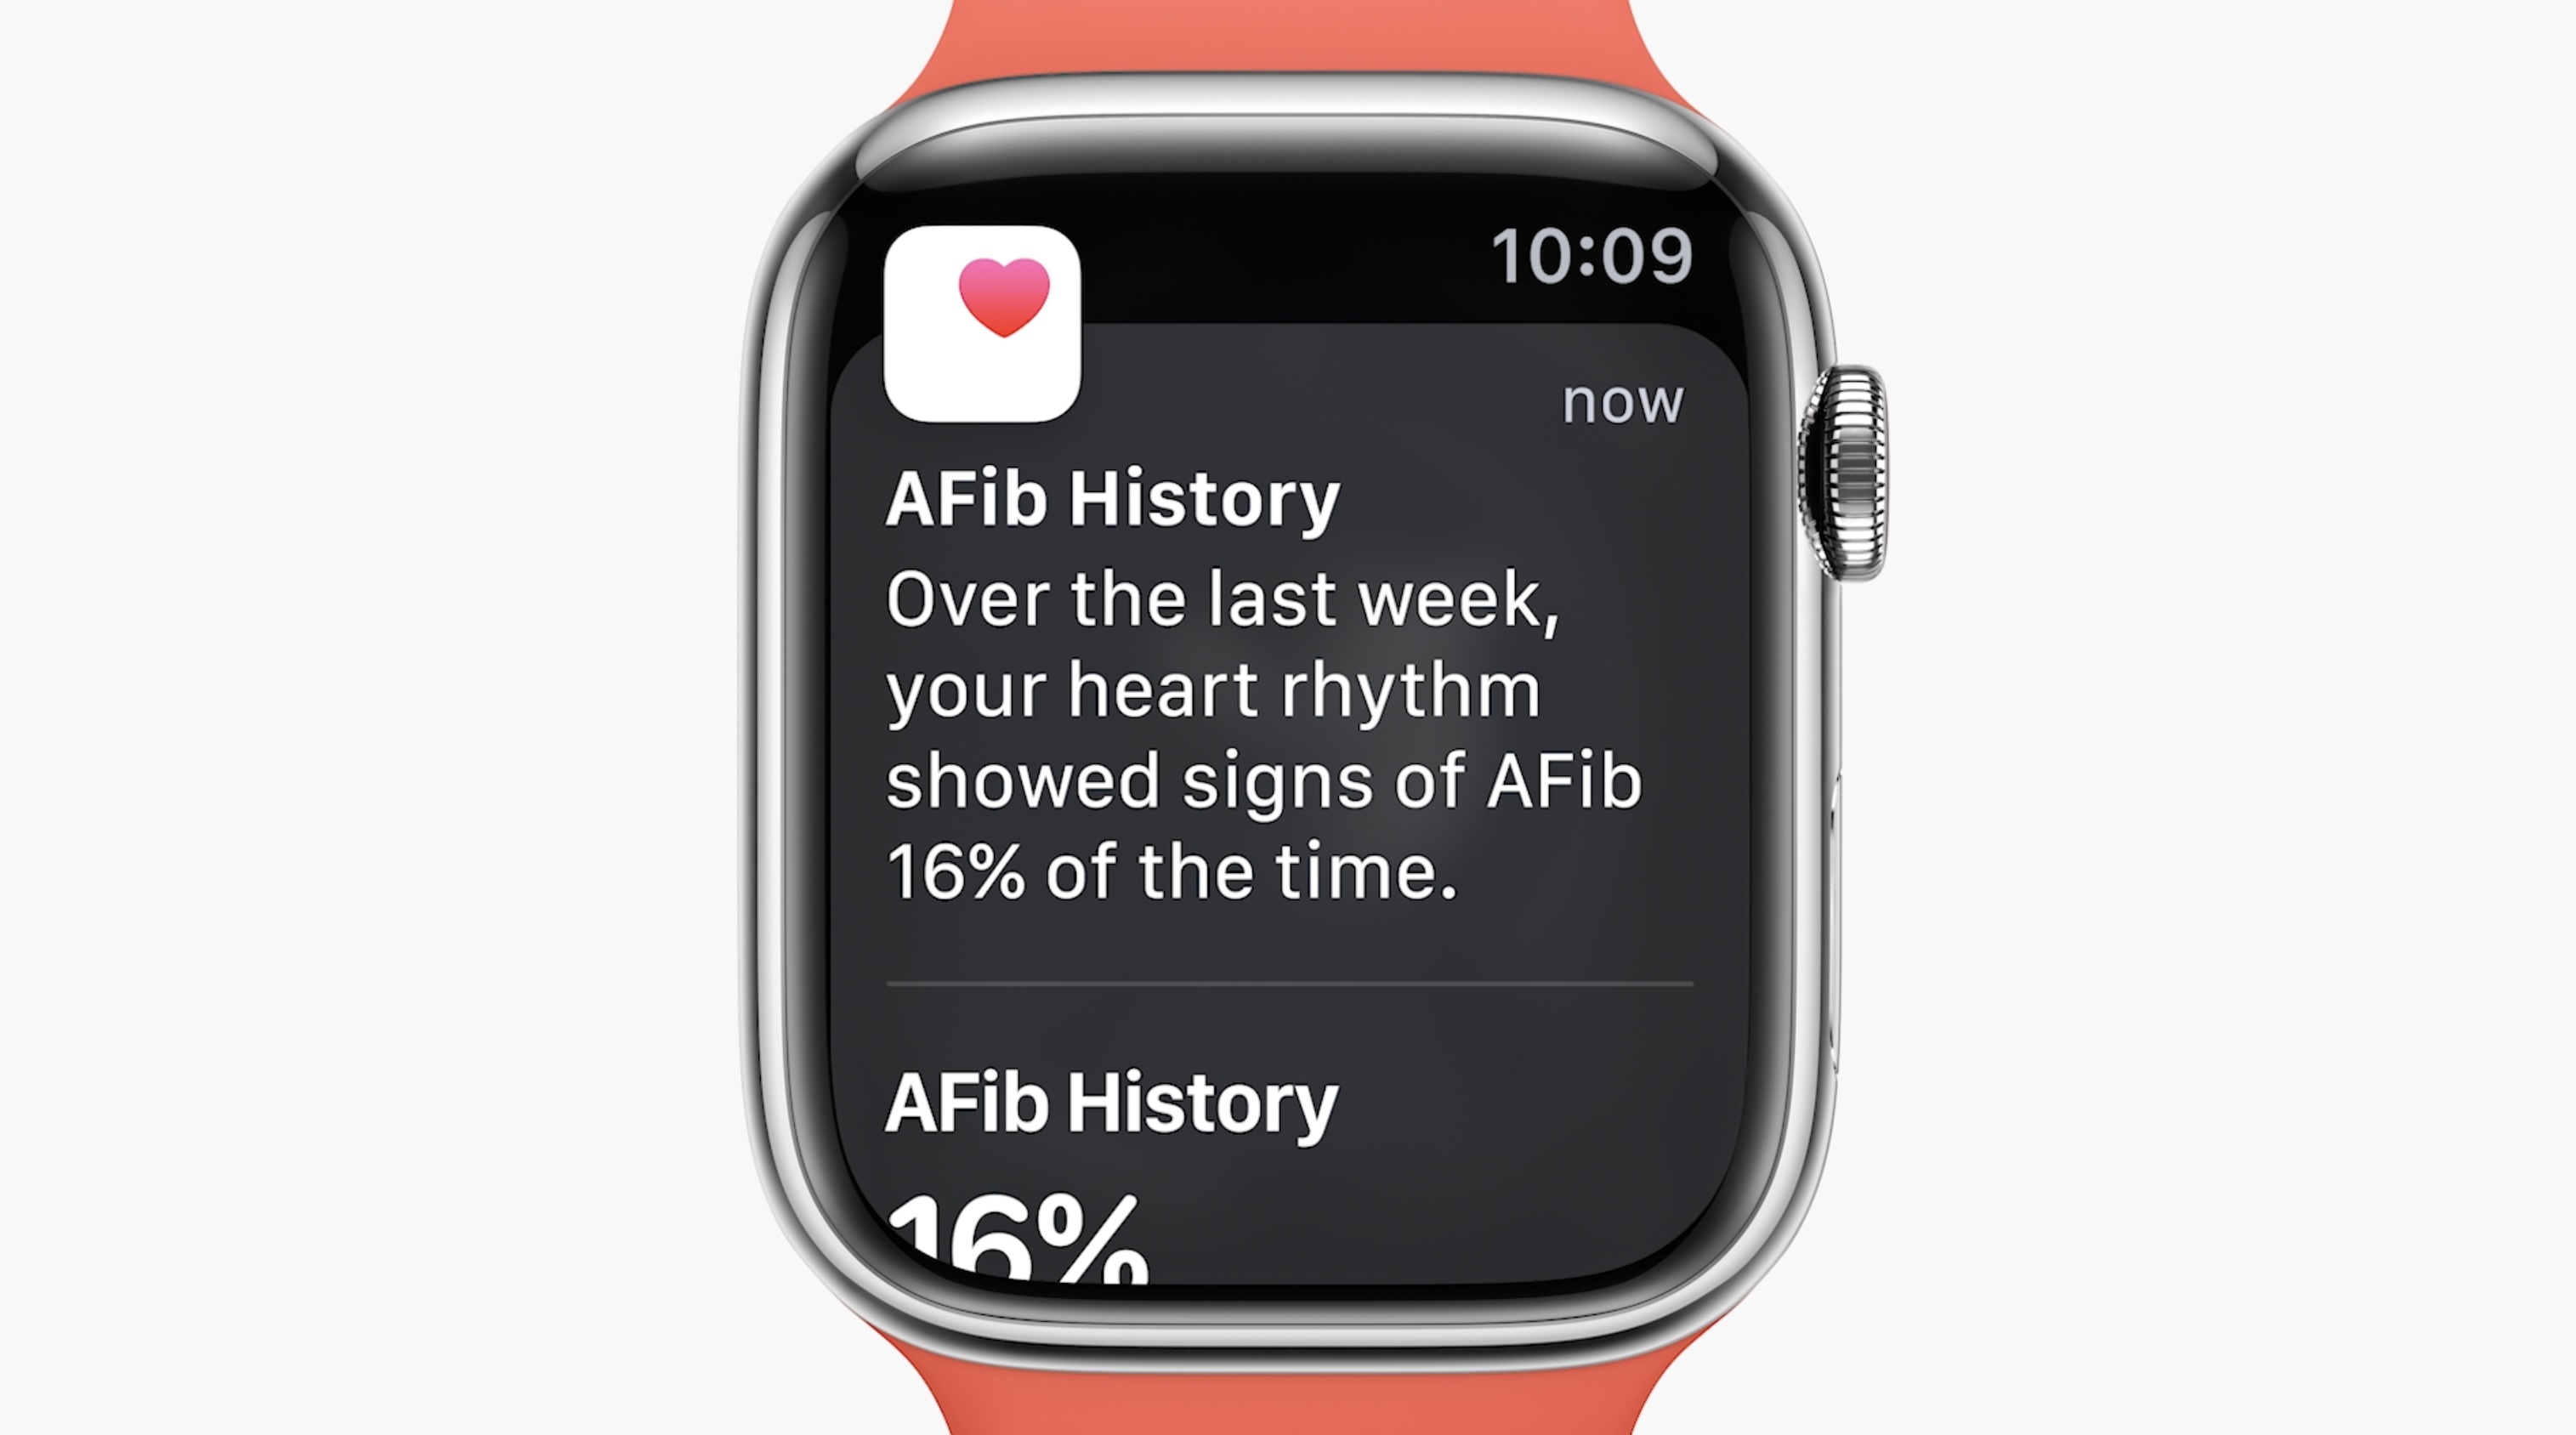 Apple Watch displaying AFib history